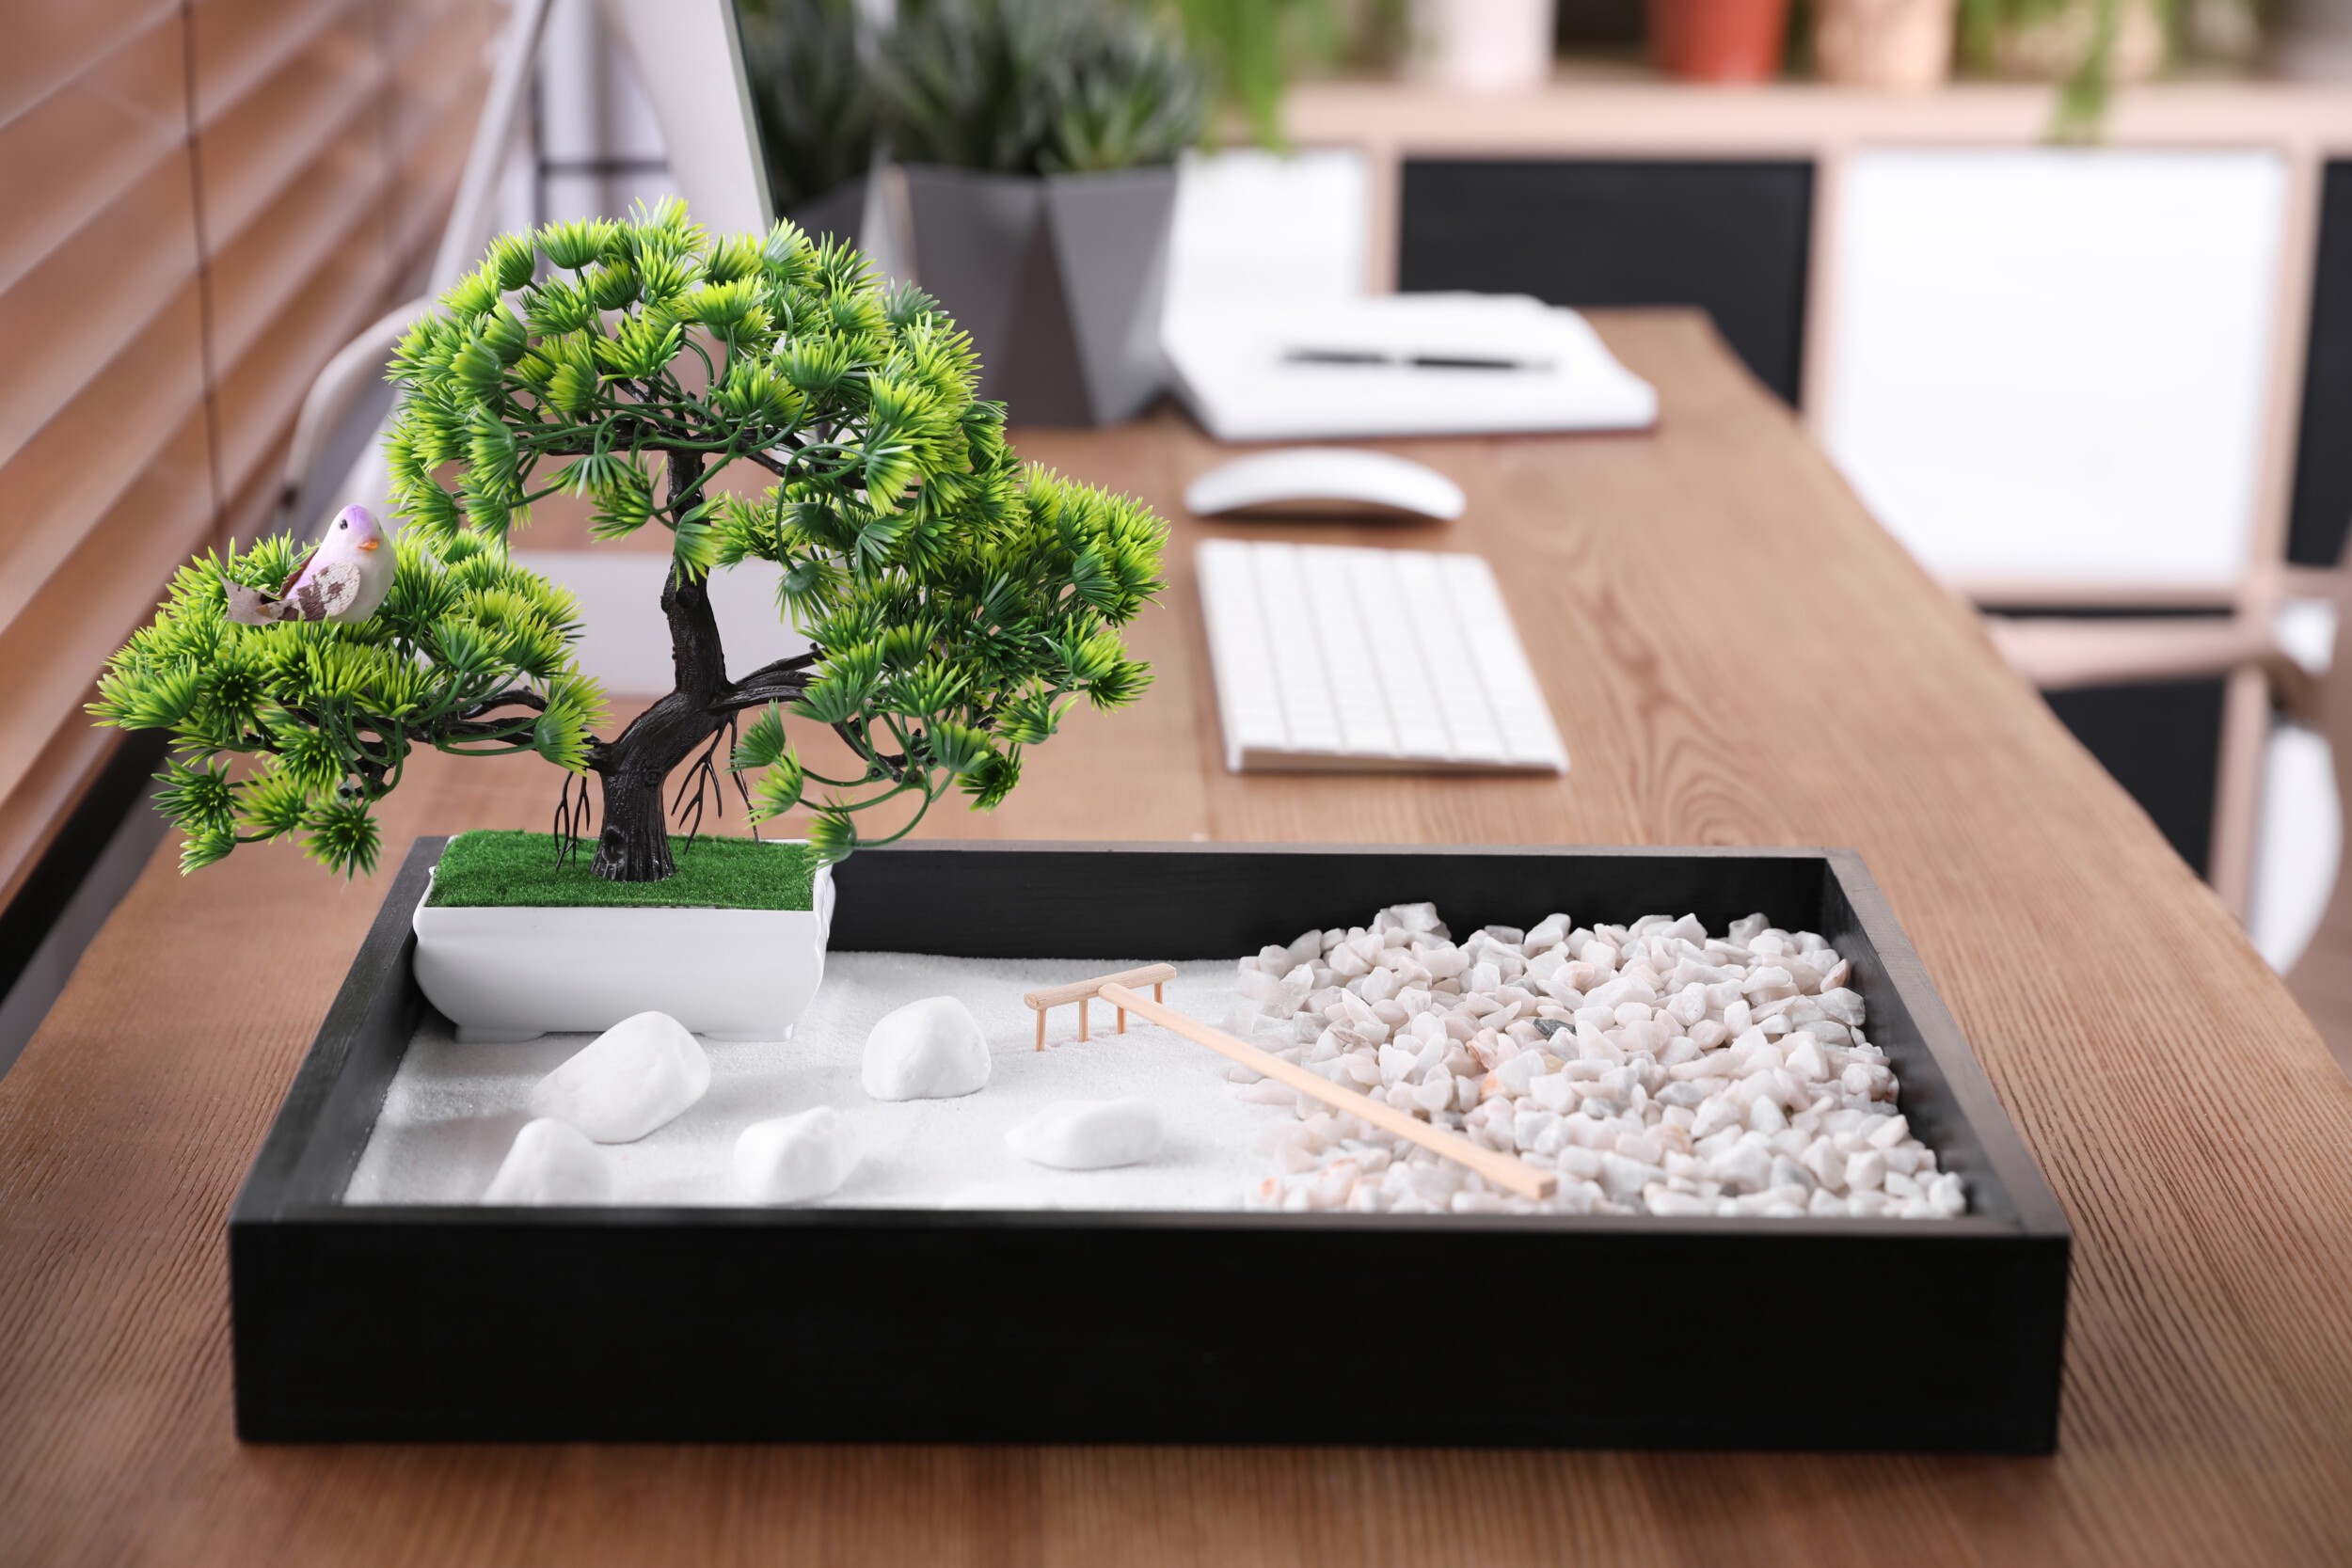 Beautiful miniature zen garden and computer on wooden table in office
